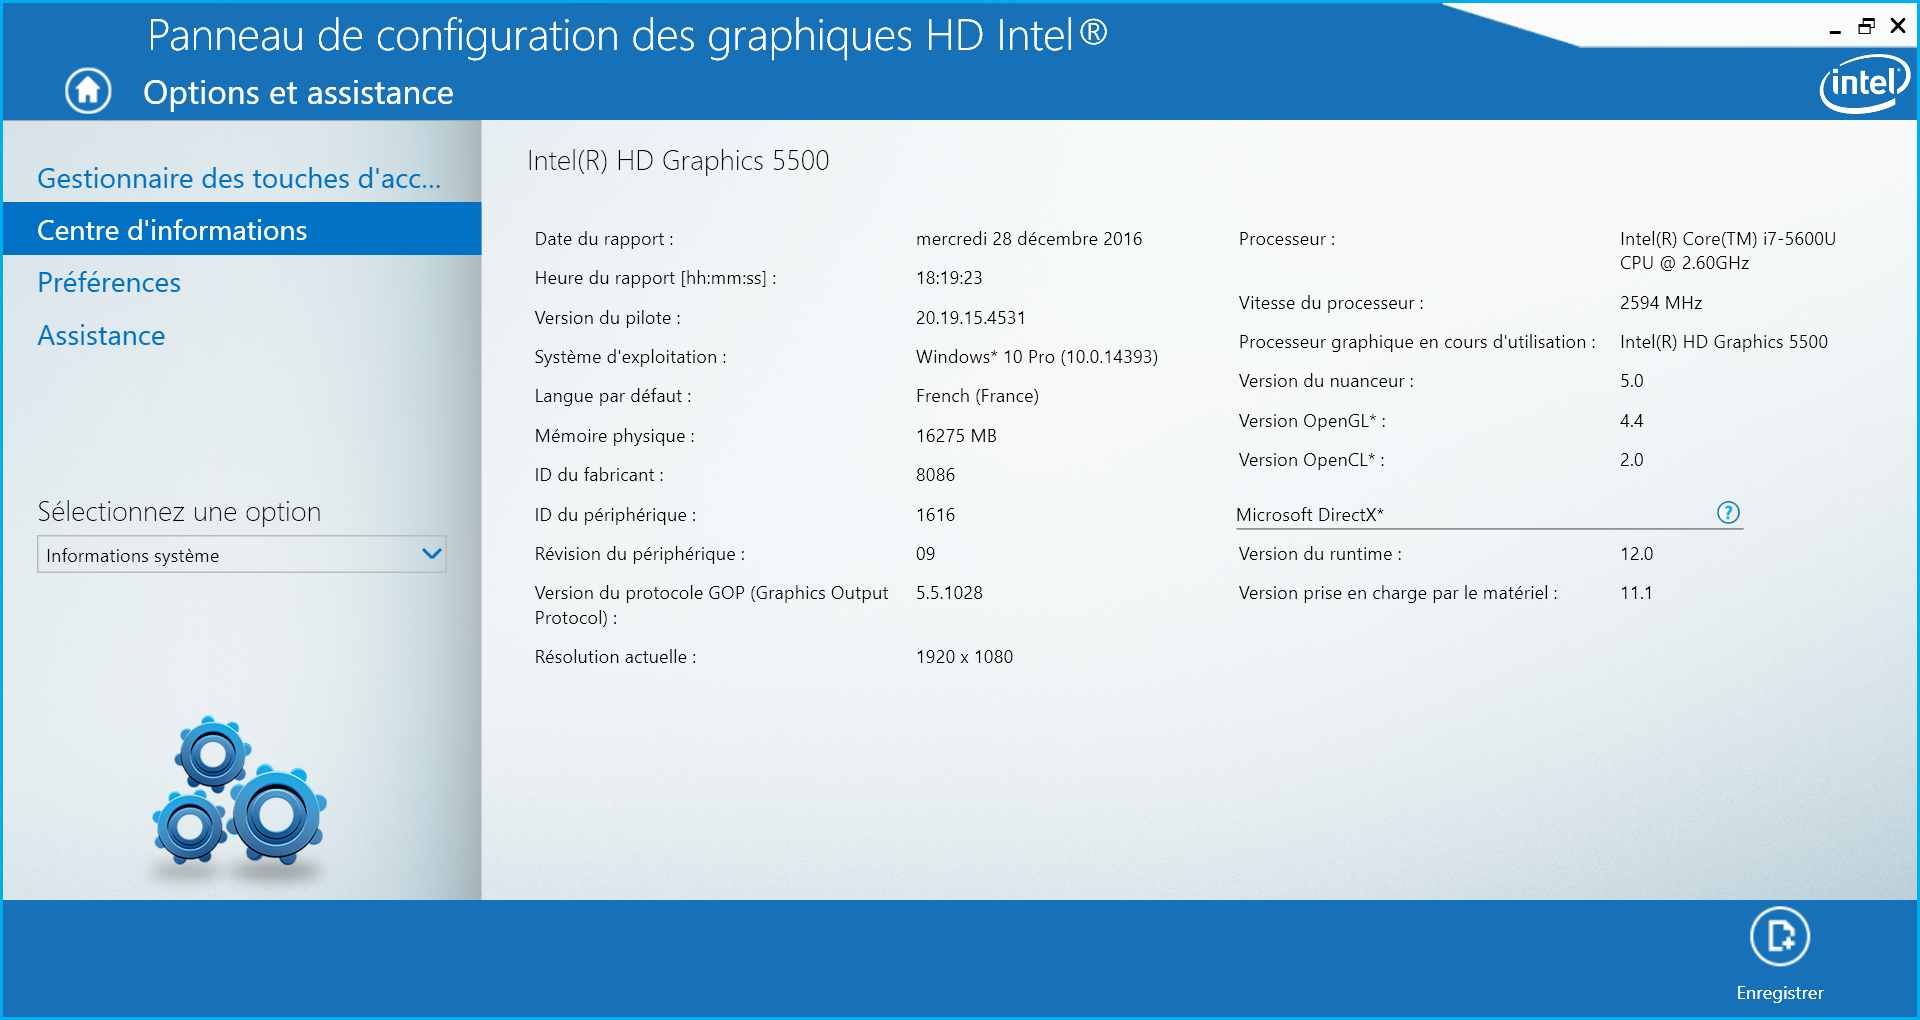 Civilization VI directx12 with HD 5500 graphics - Intel Community